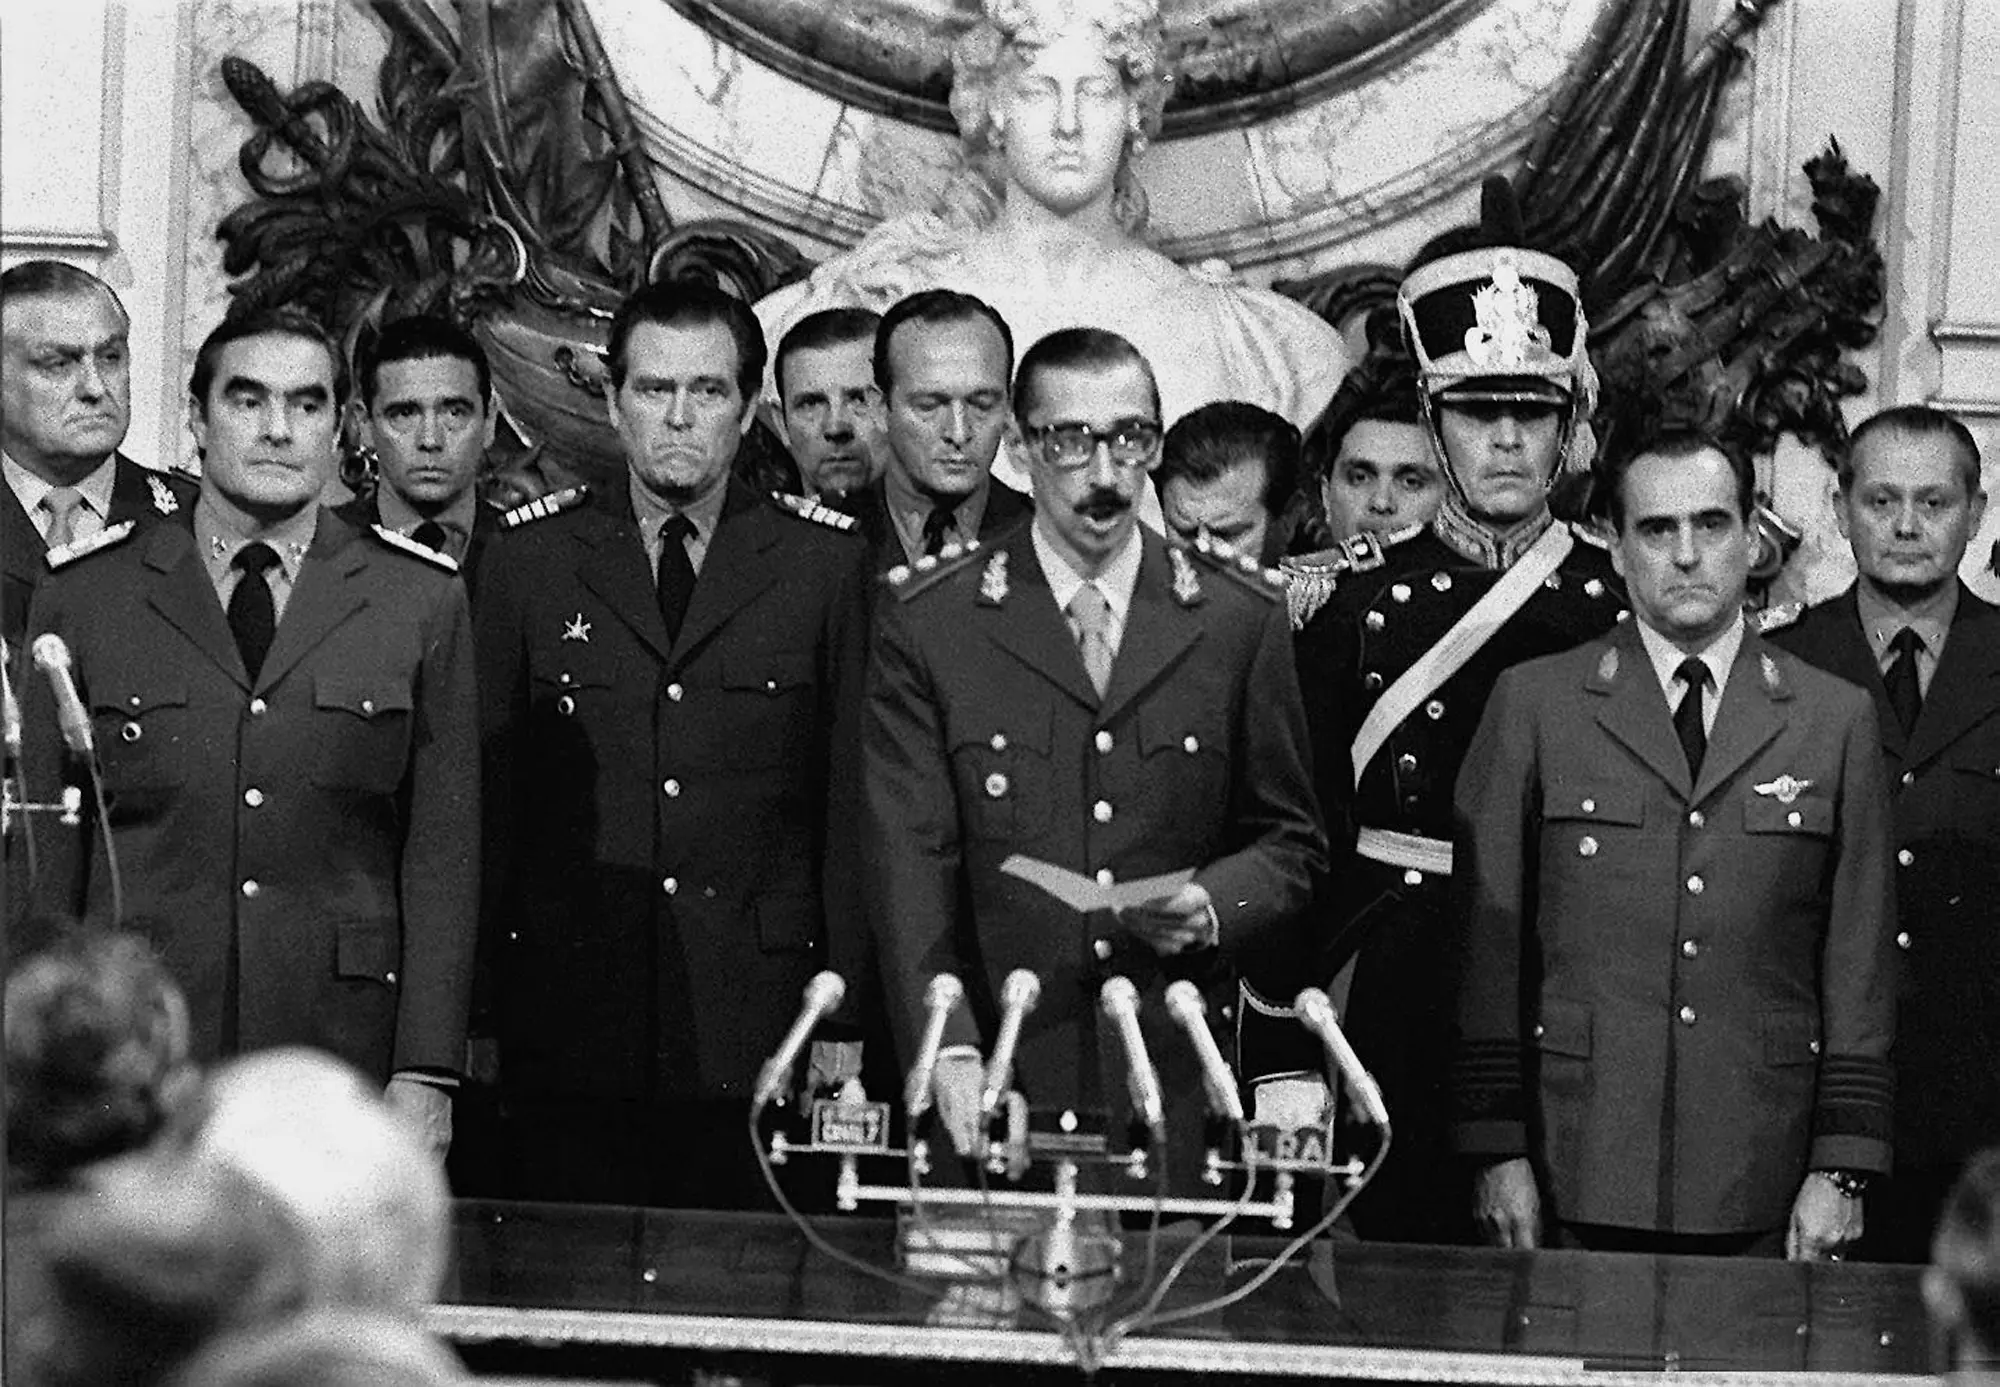 dictadura militar resumen - Cuál fue el motivo de la dictadura militar en Argentina